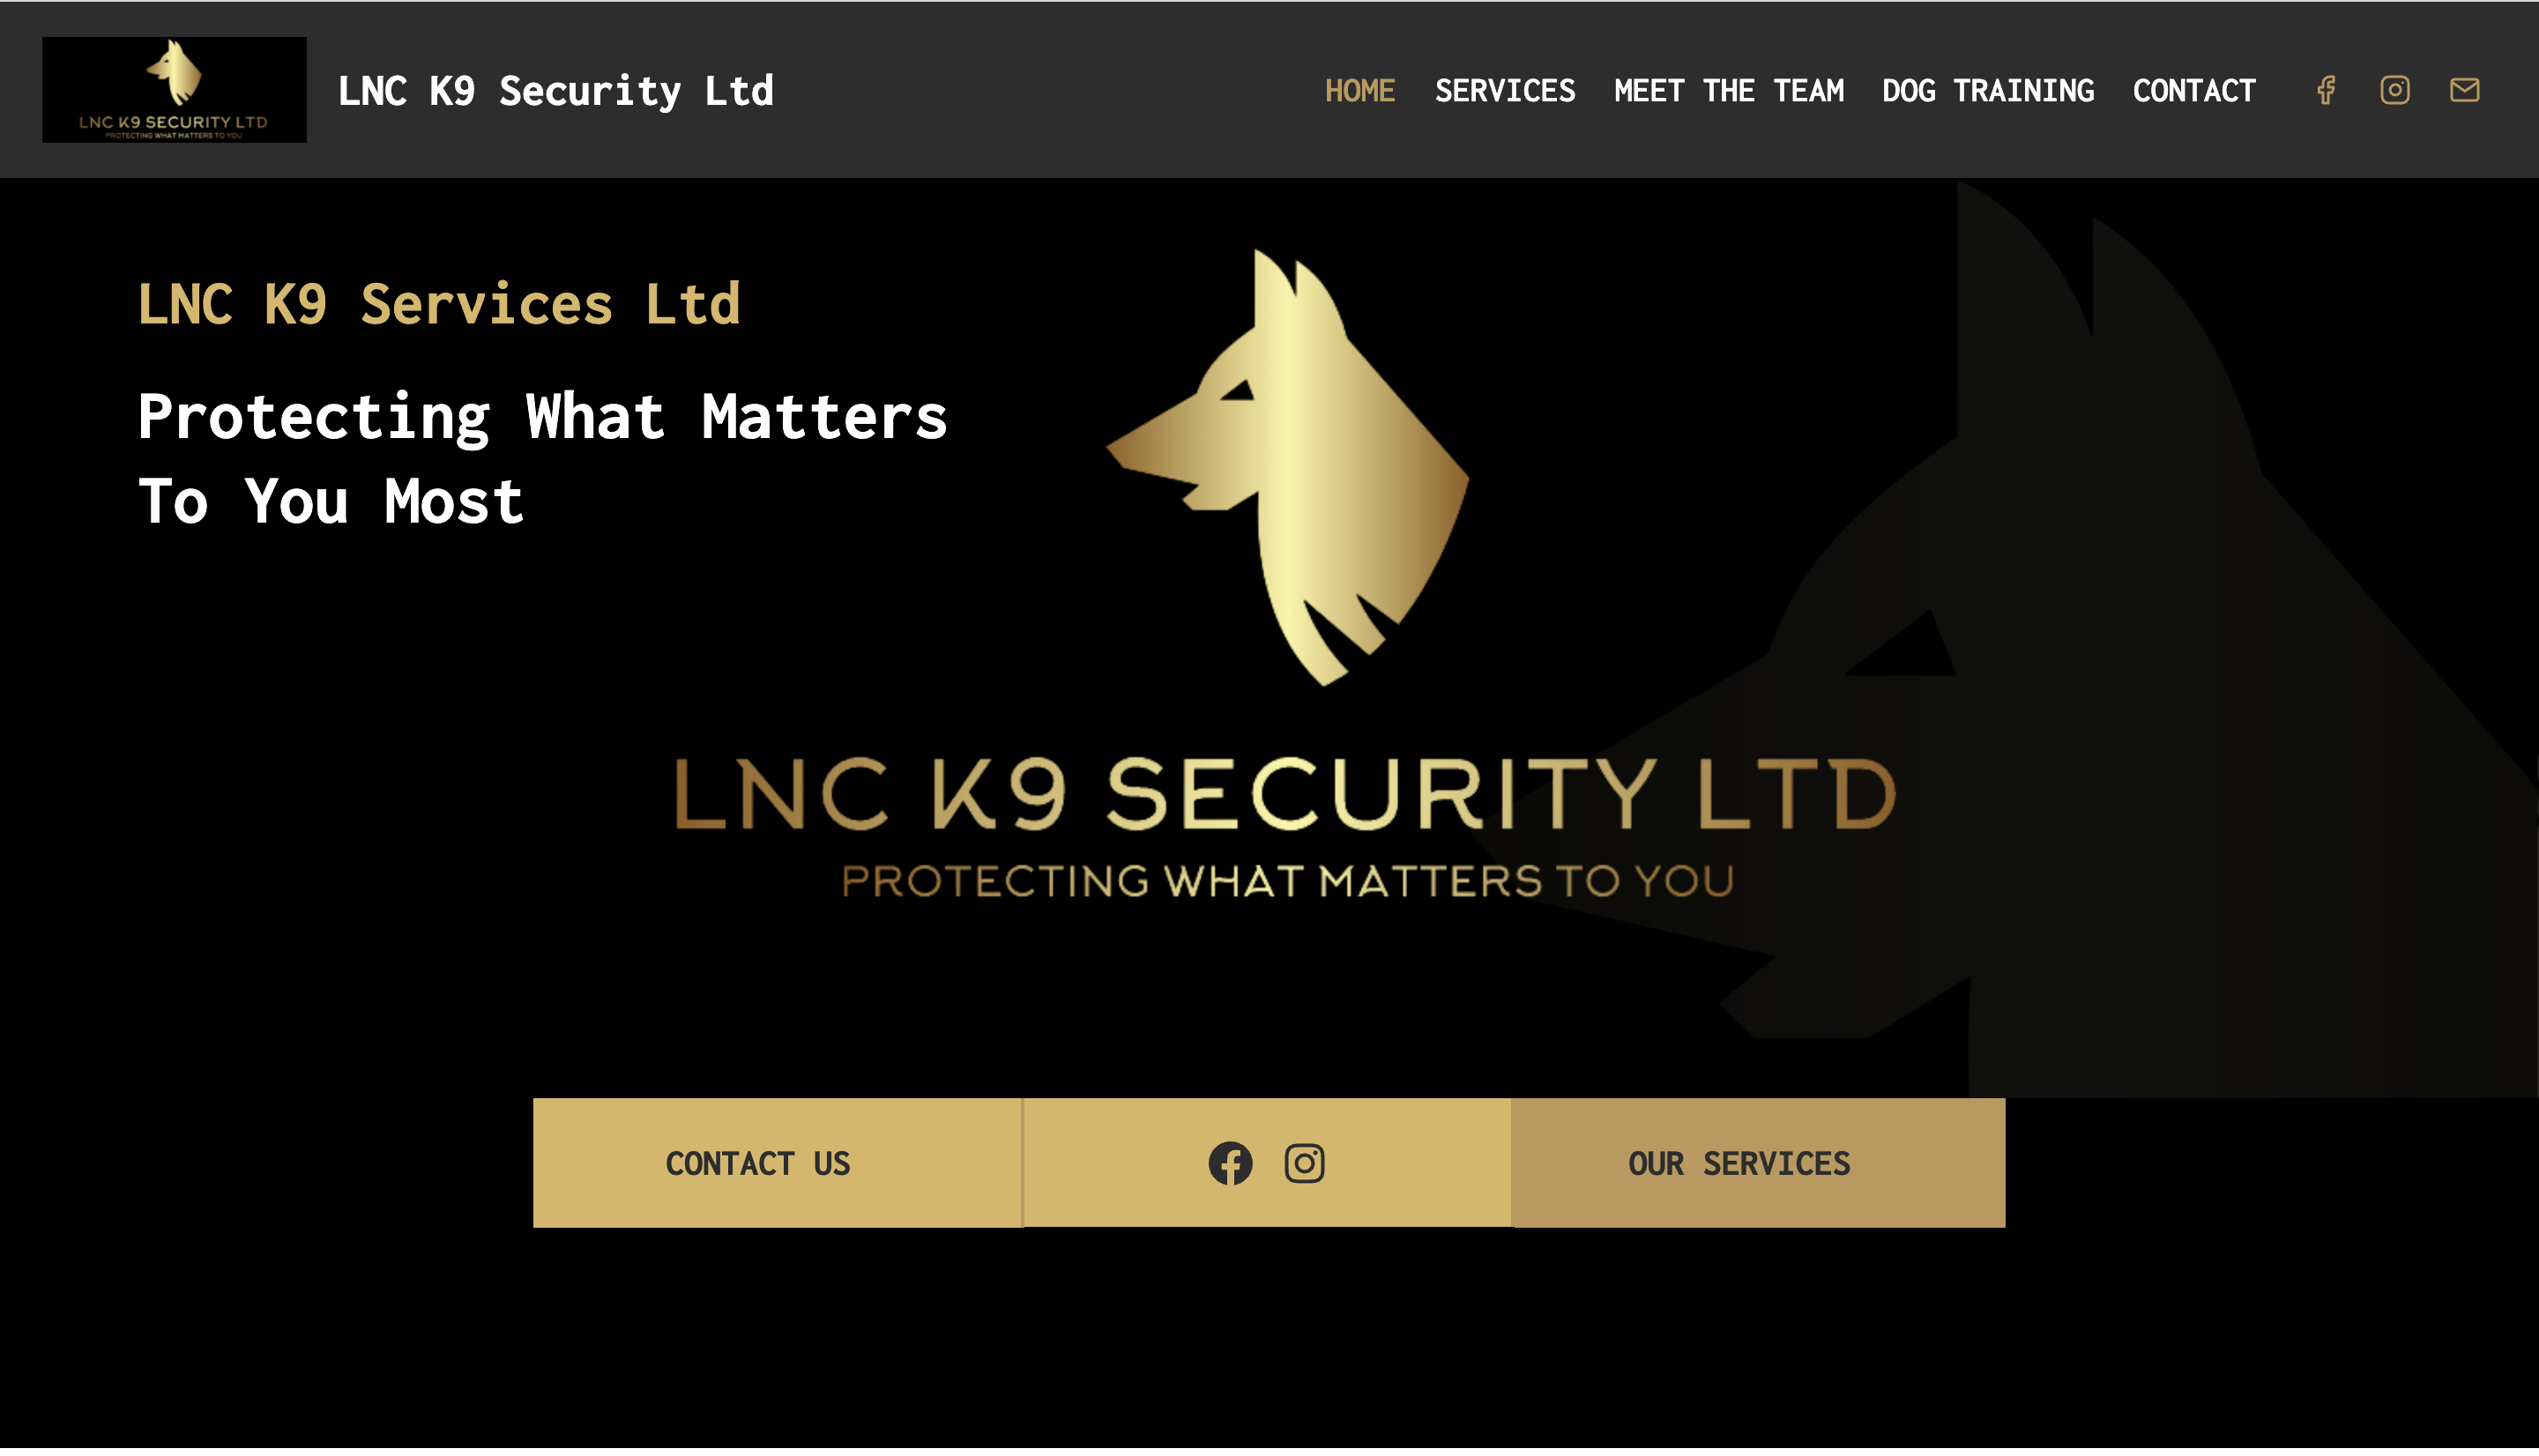 LNC K9 Security Ltd